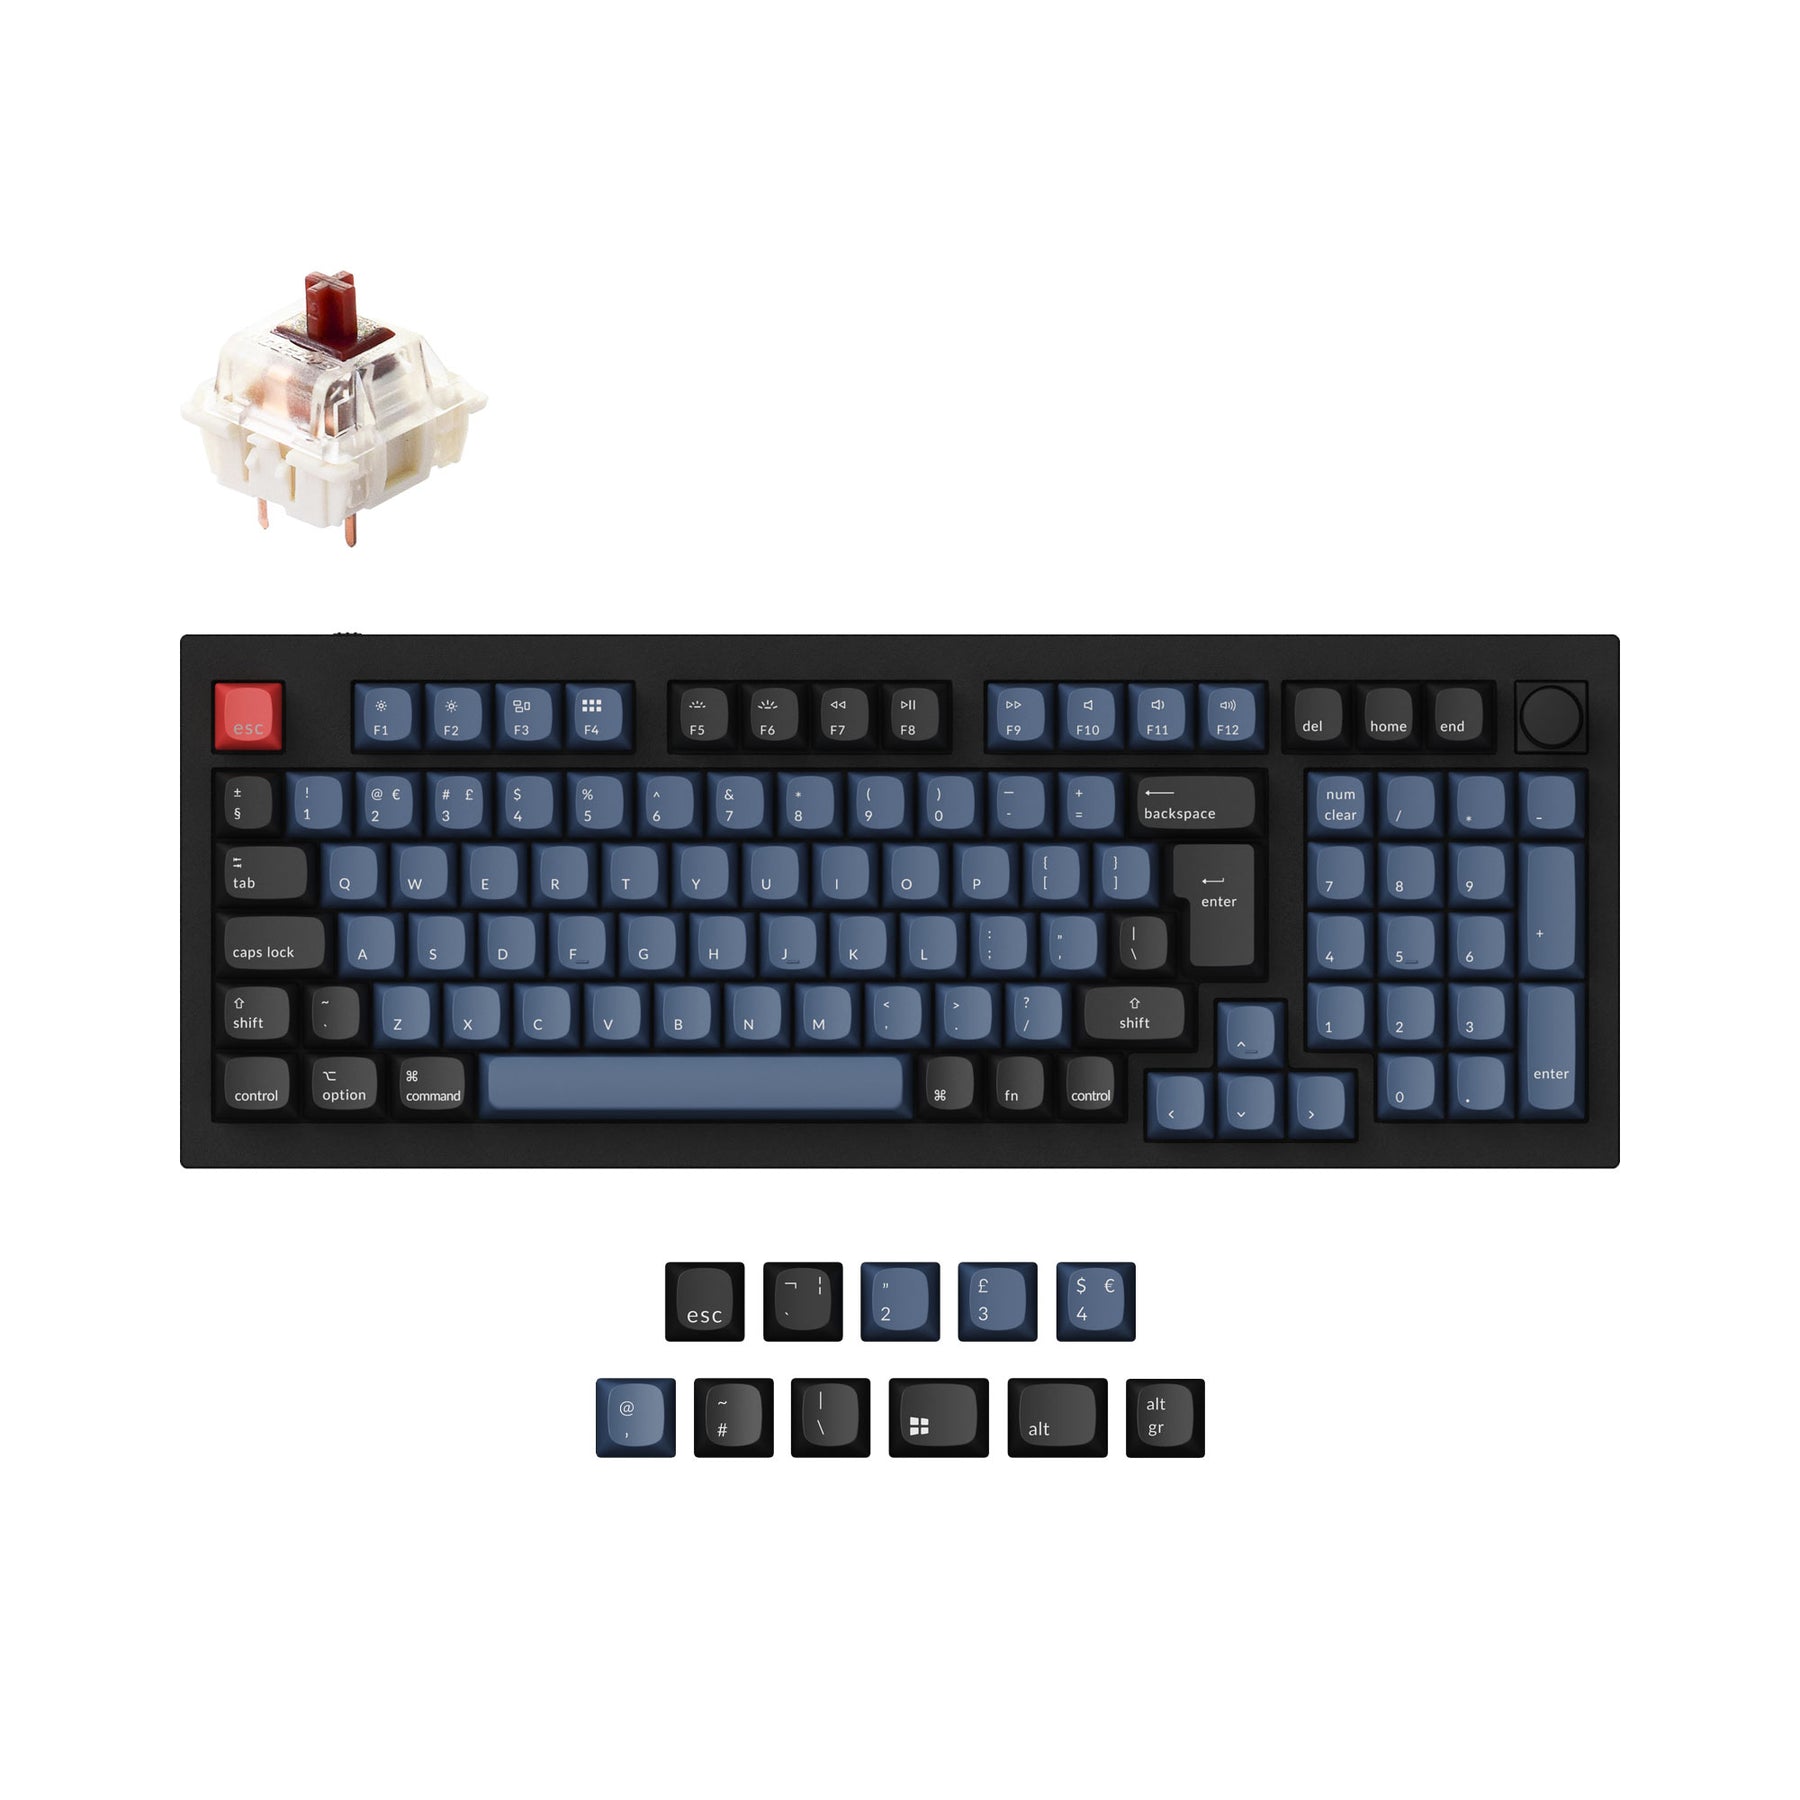 Paranafloden mørke Mudret Keychron Q5 QMK Custom Mechanical Keyboard ISO Layout Collection